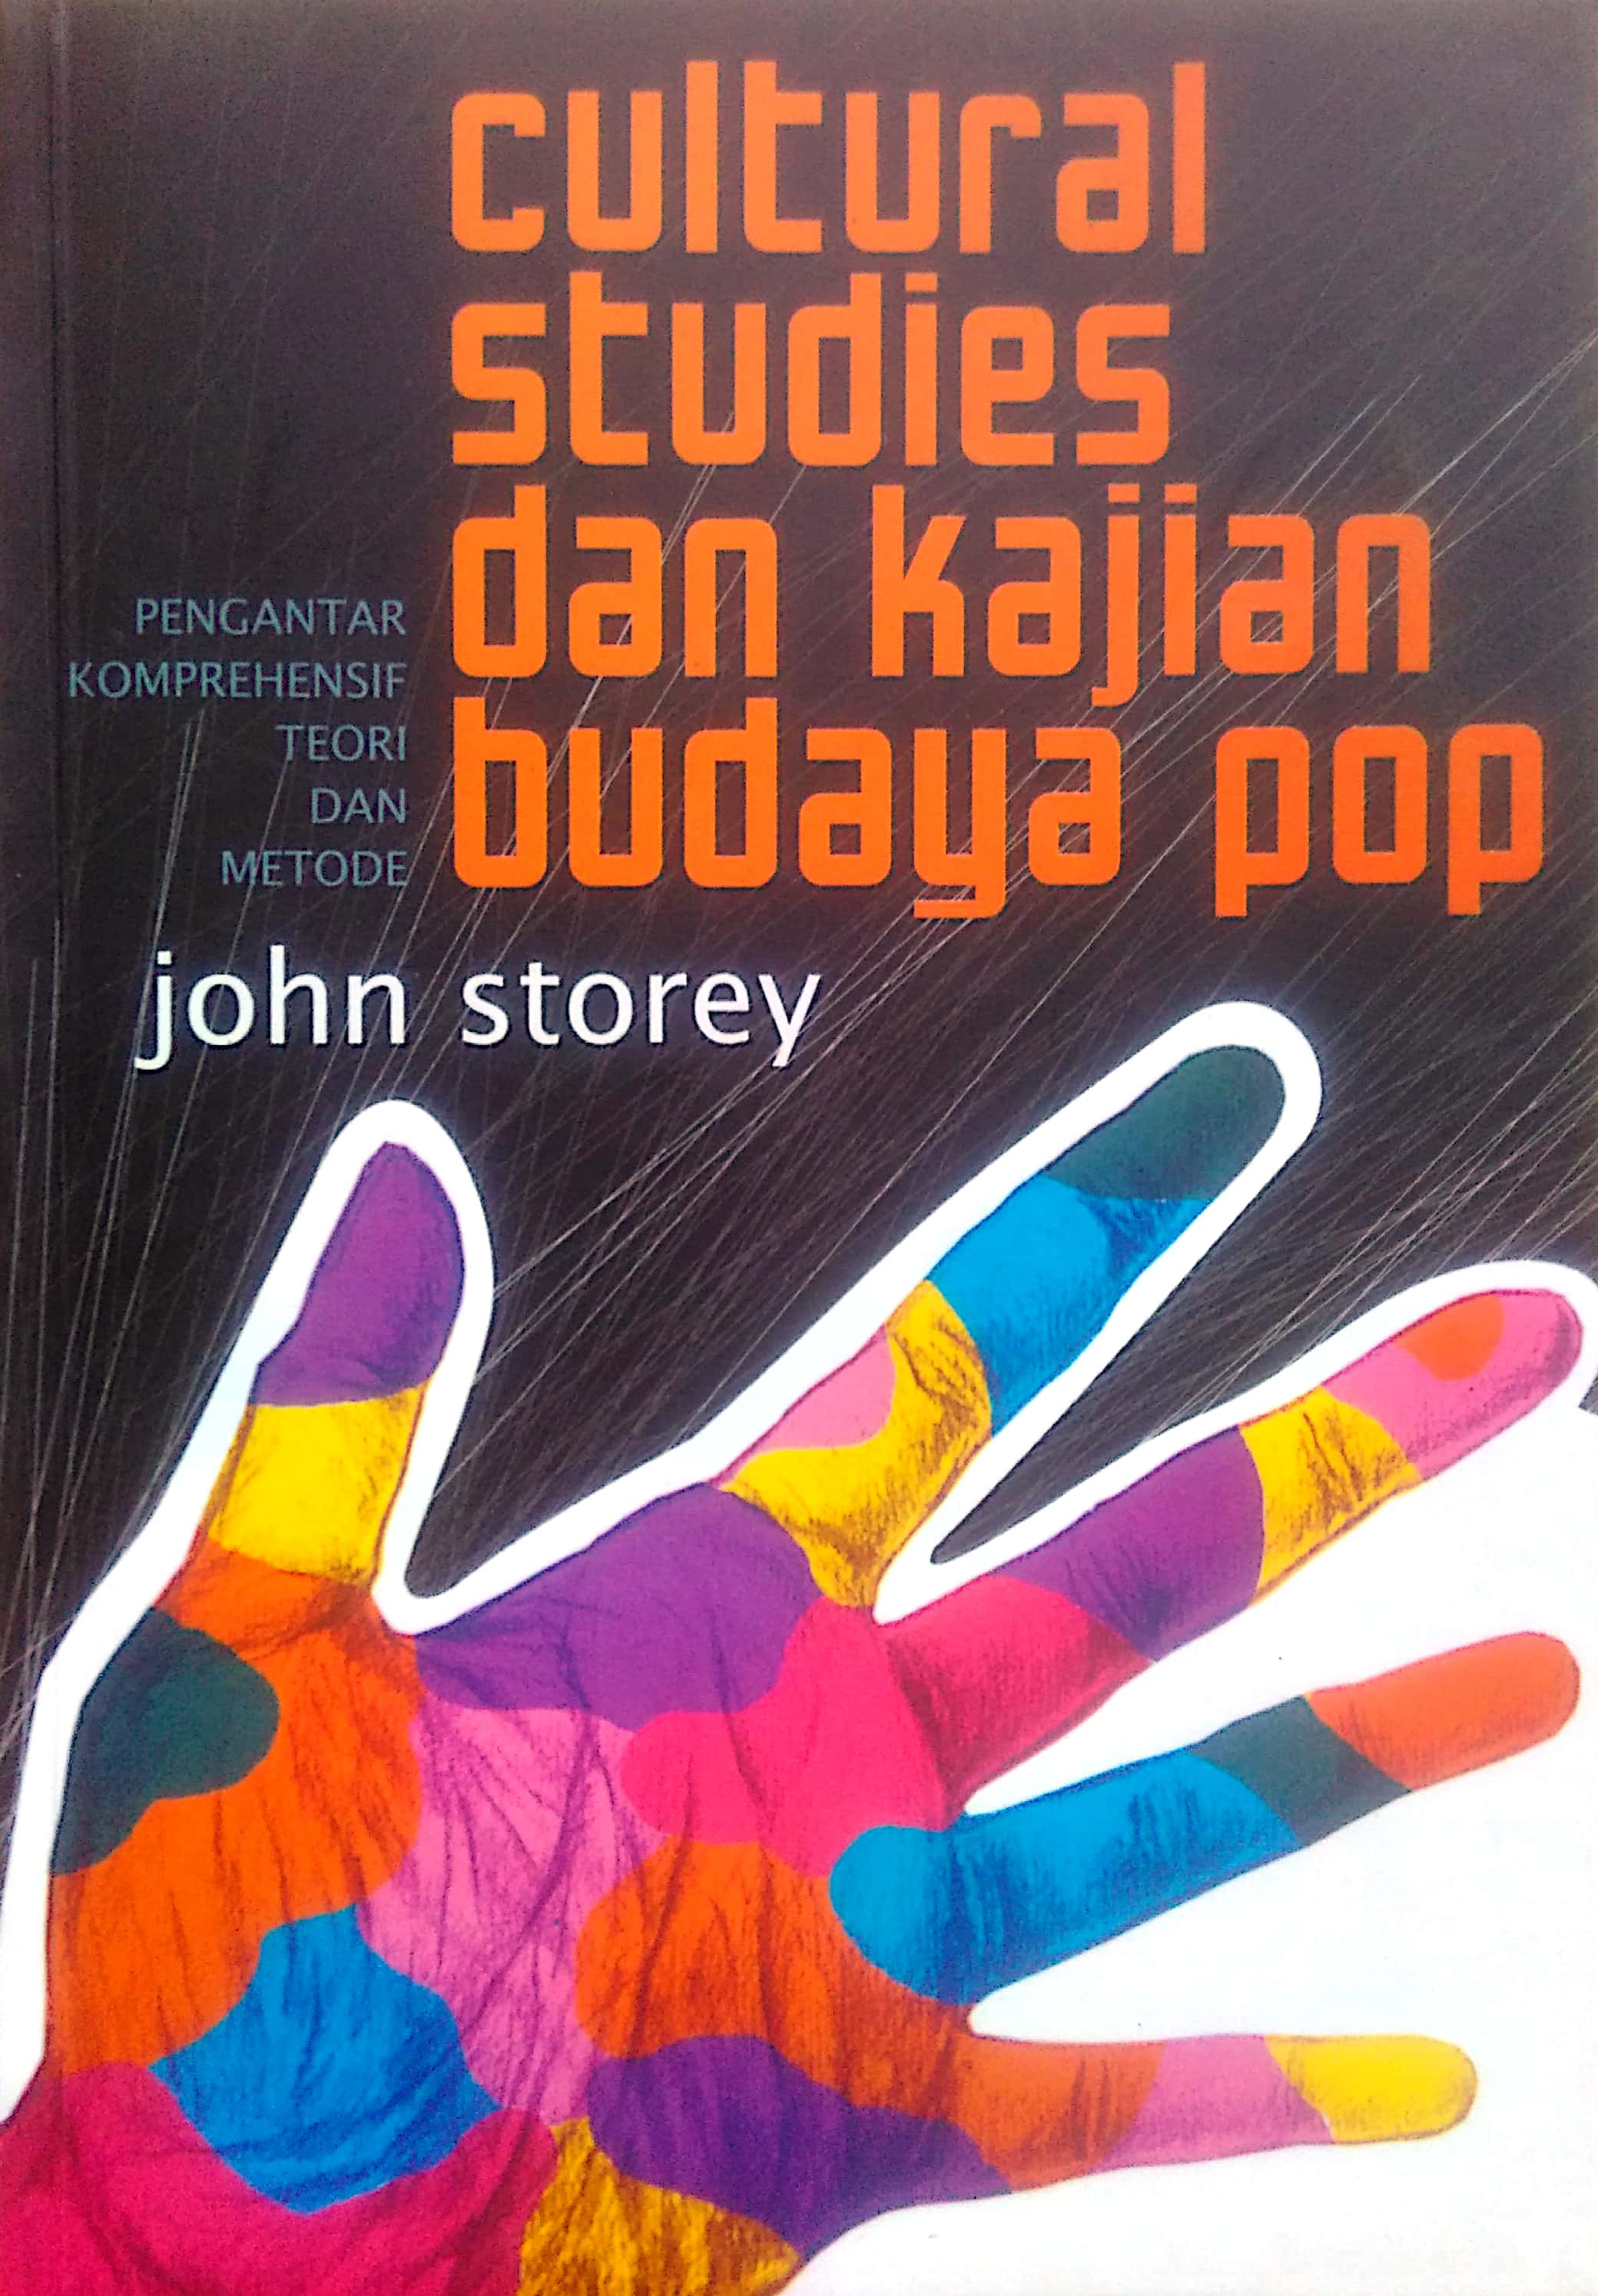 Cultural Studies dan Kajian Budaya Pop